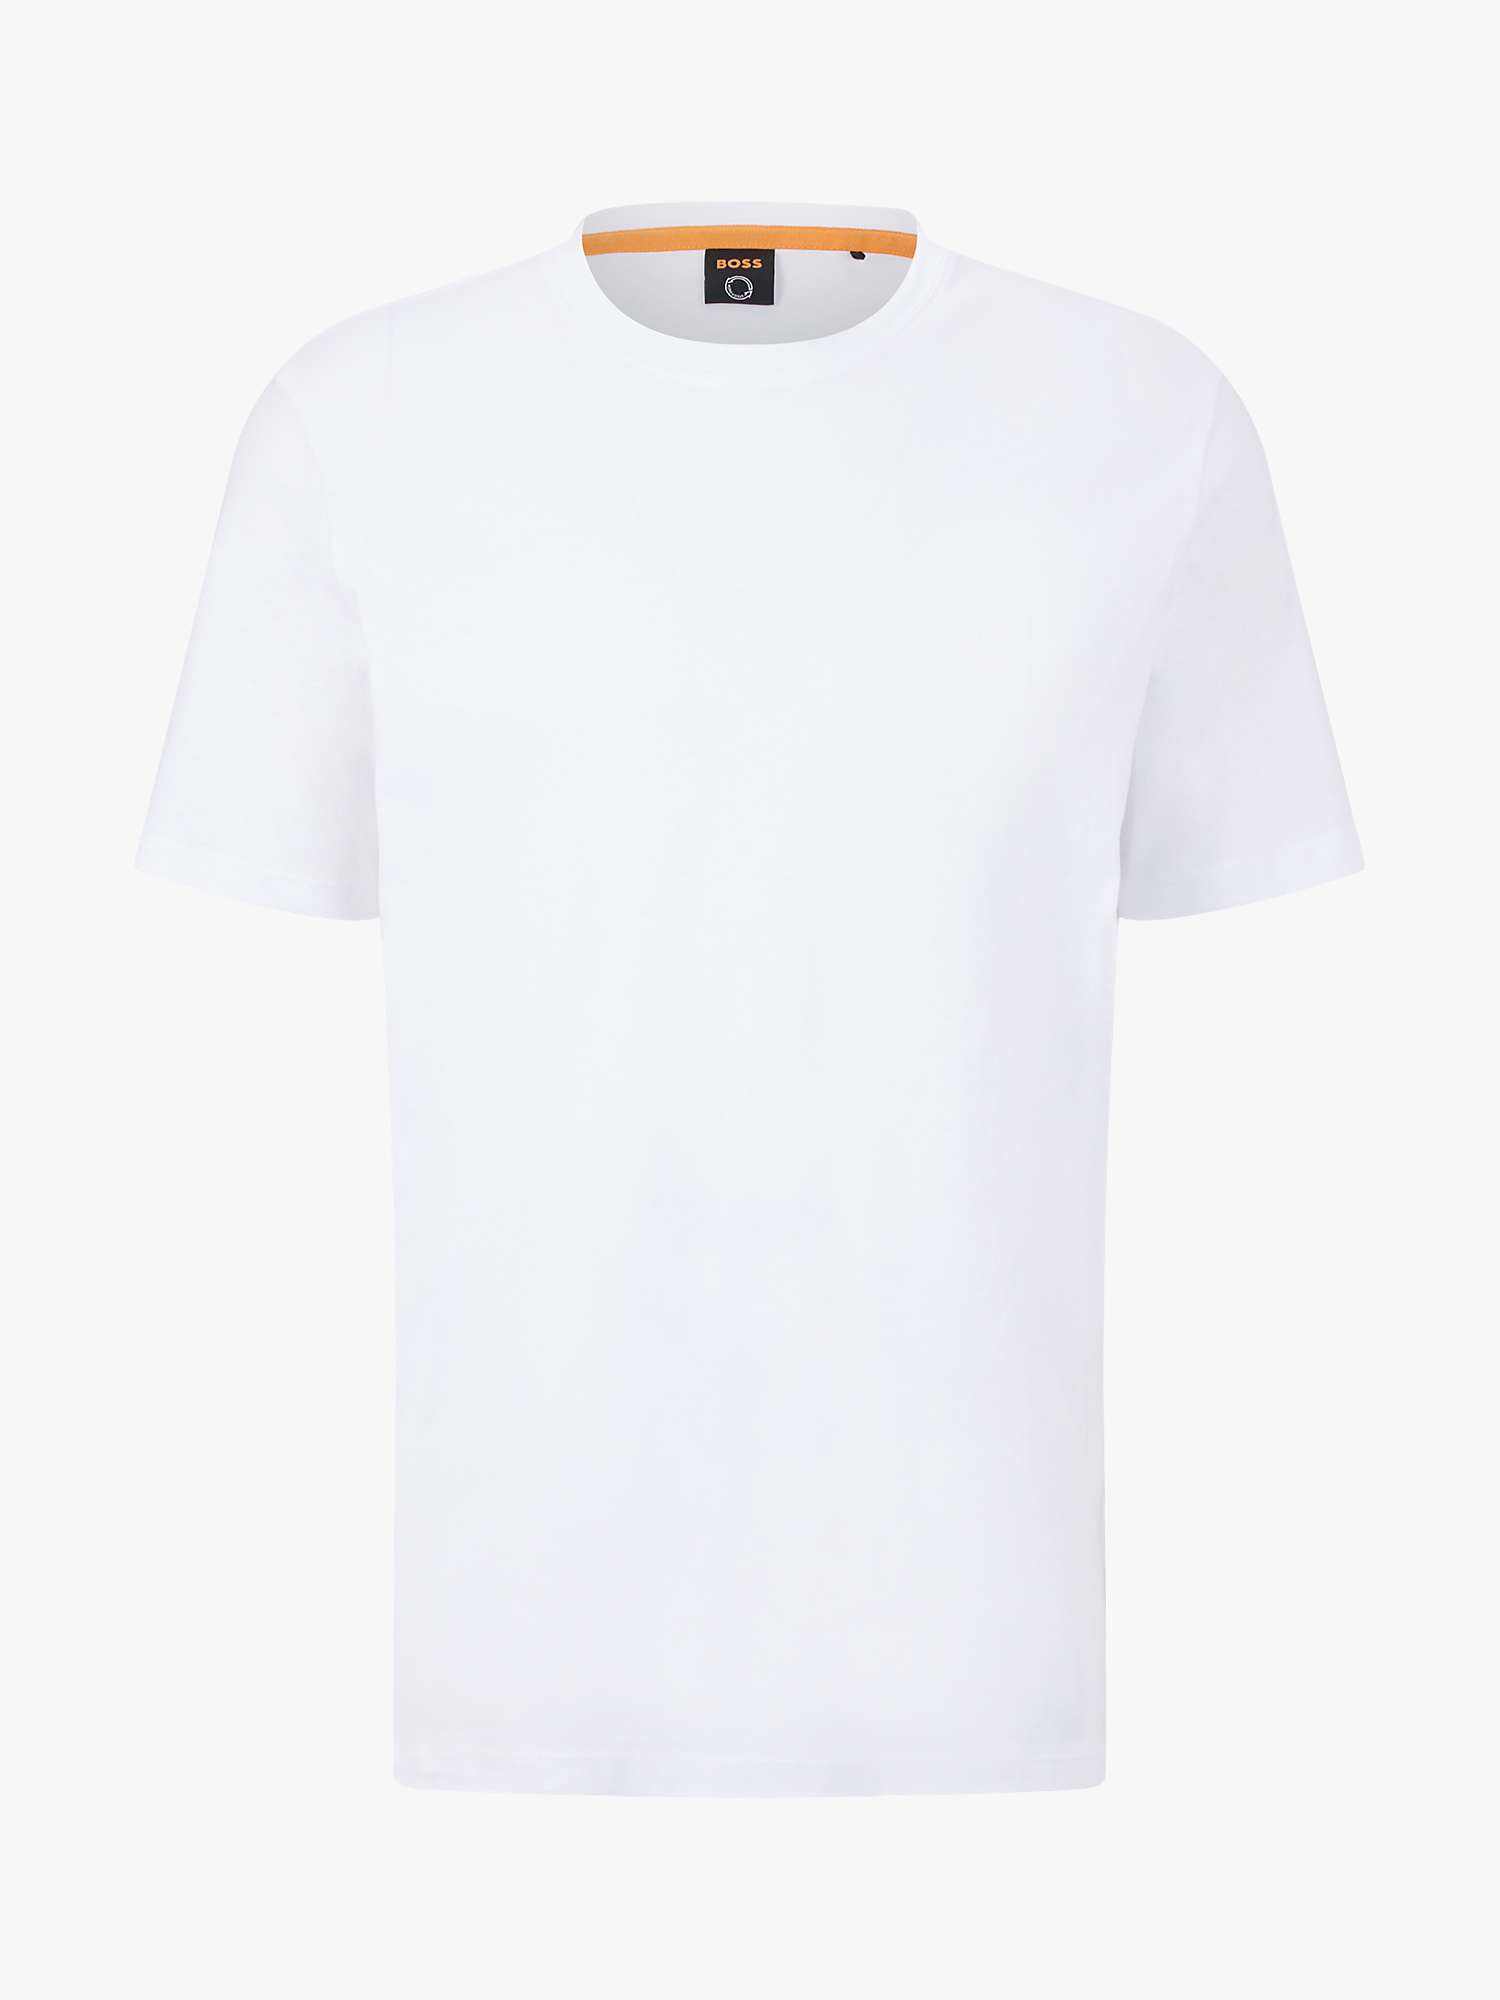 BOSS Tales Tonal Logo T-Shirt, White at John Lewis & Partners